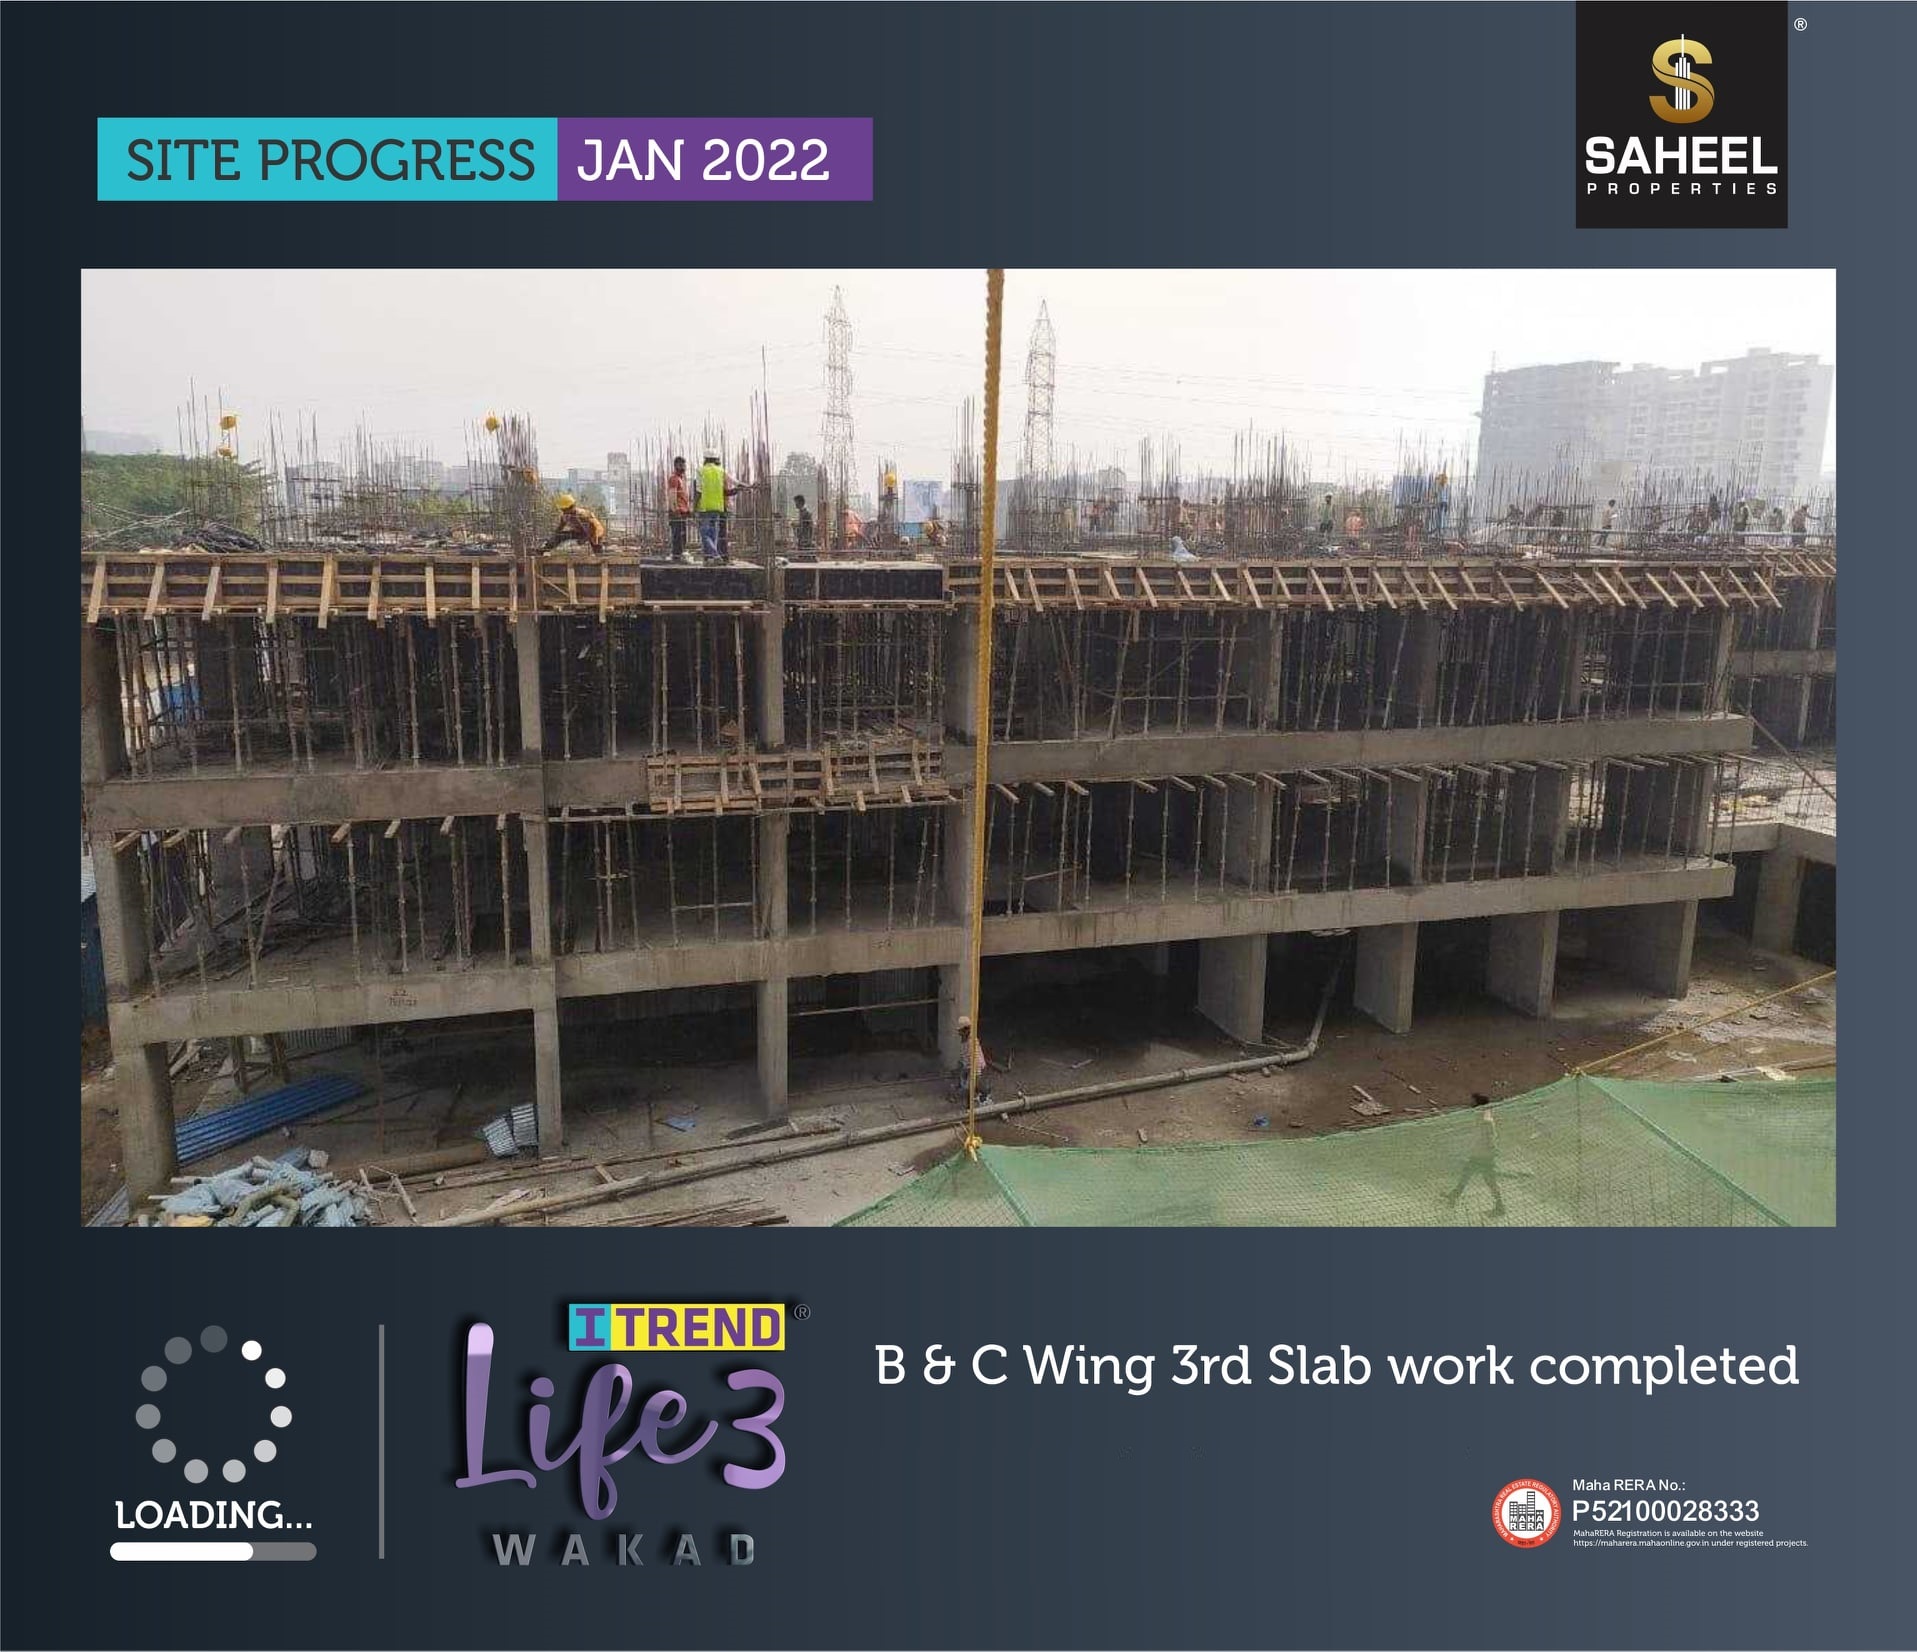 Site progress Jan 2022 at Saheel ITrend Life 3, Pune